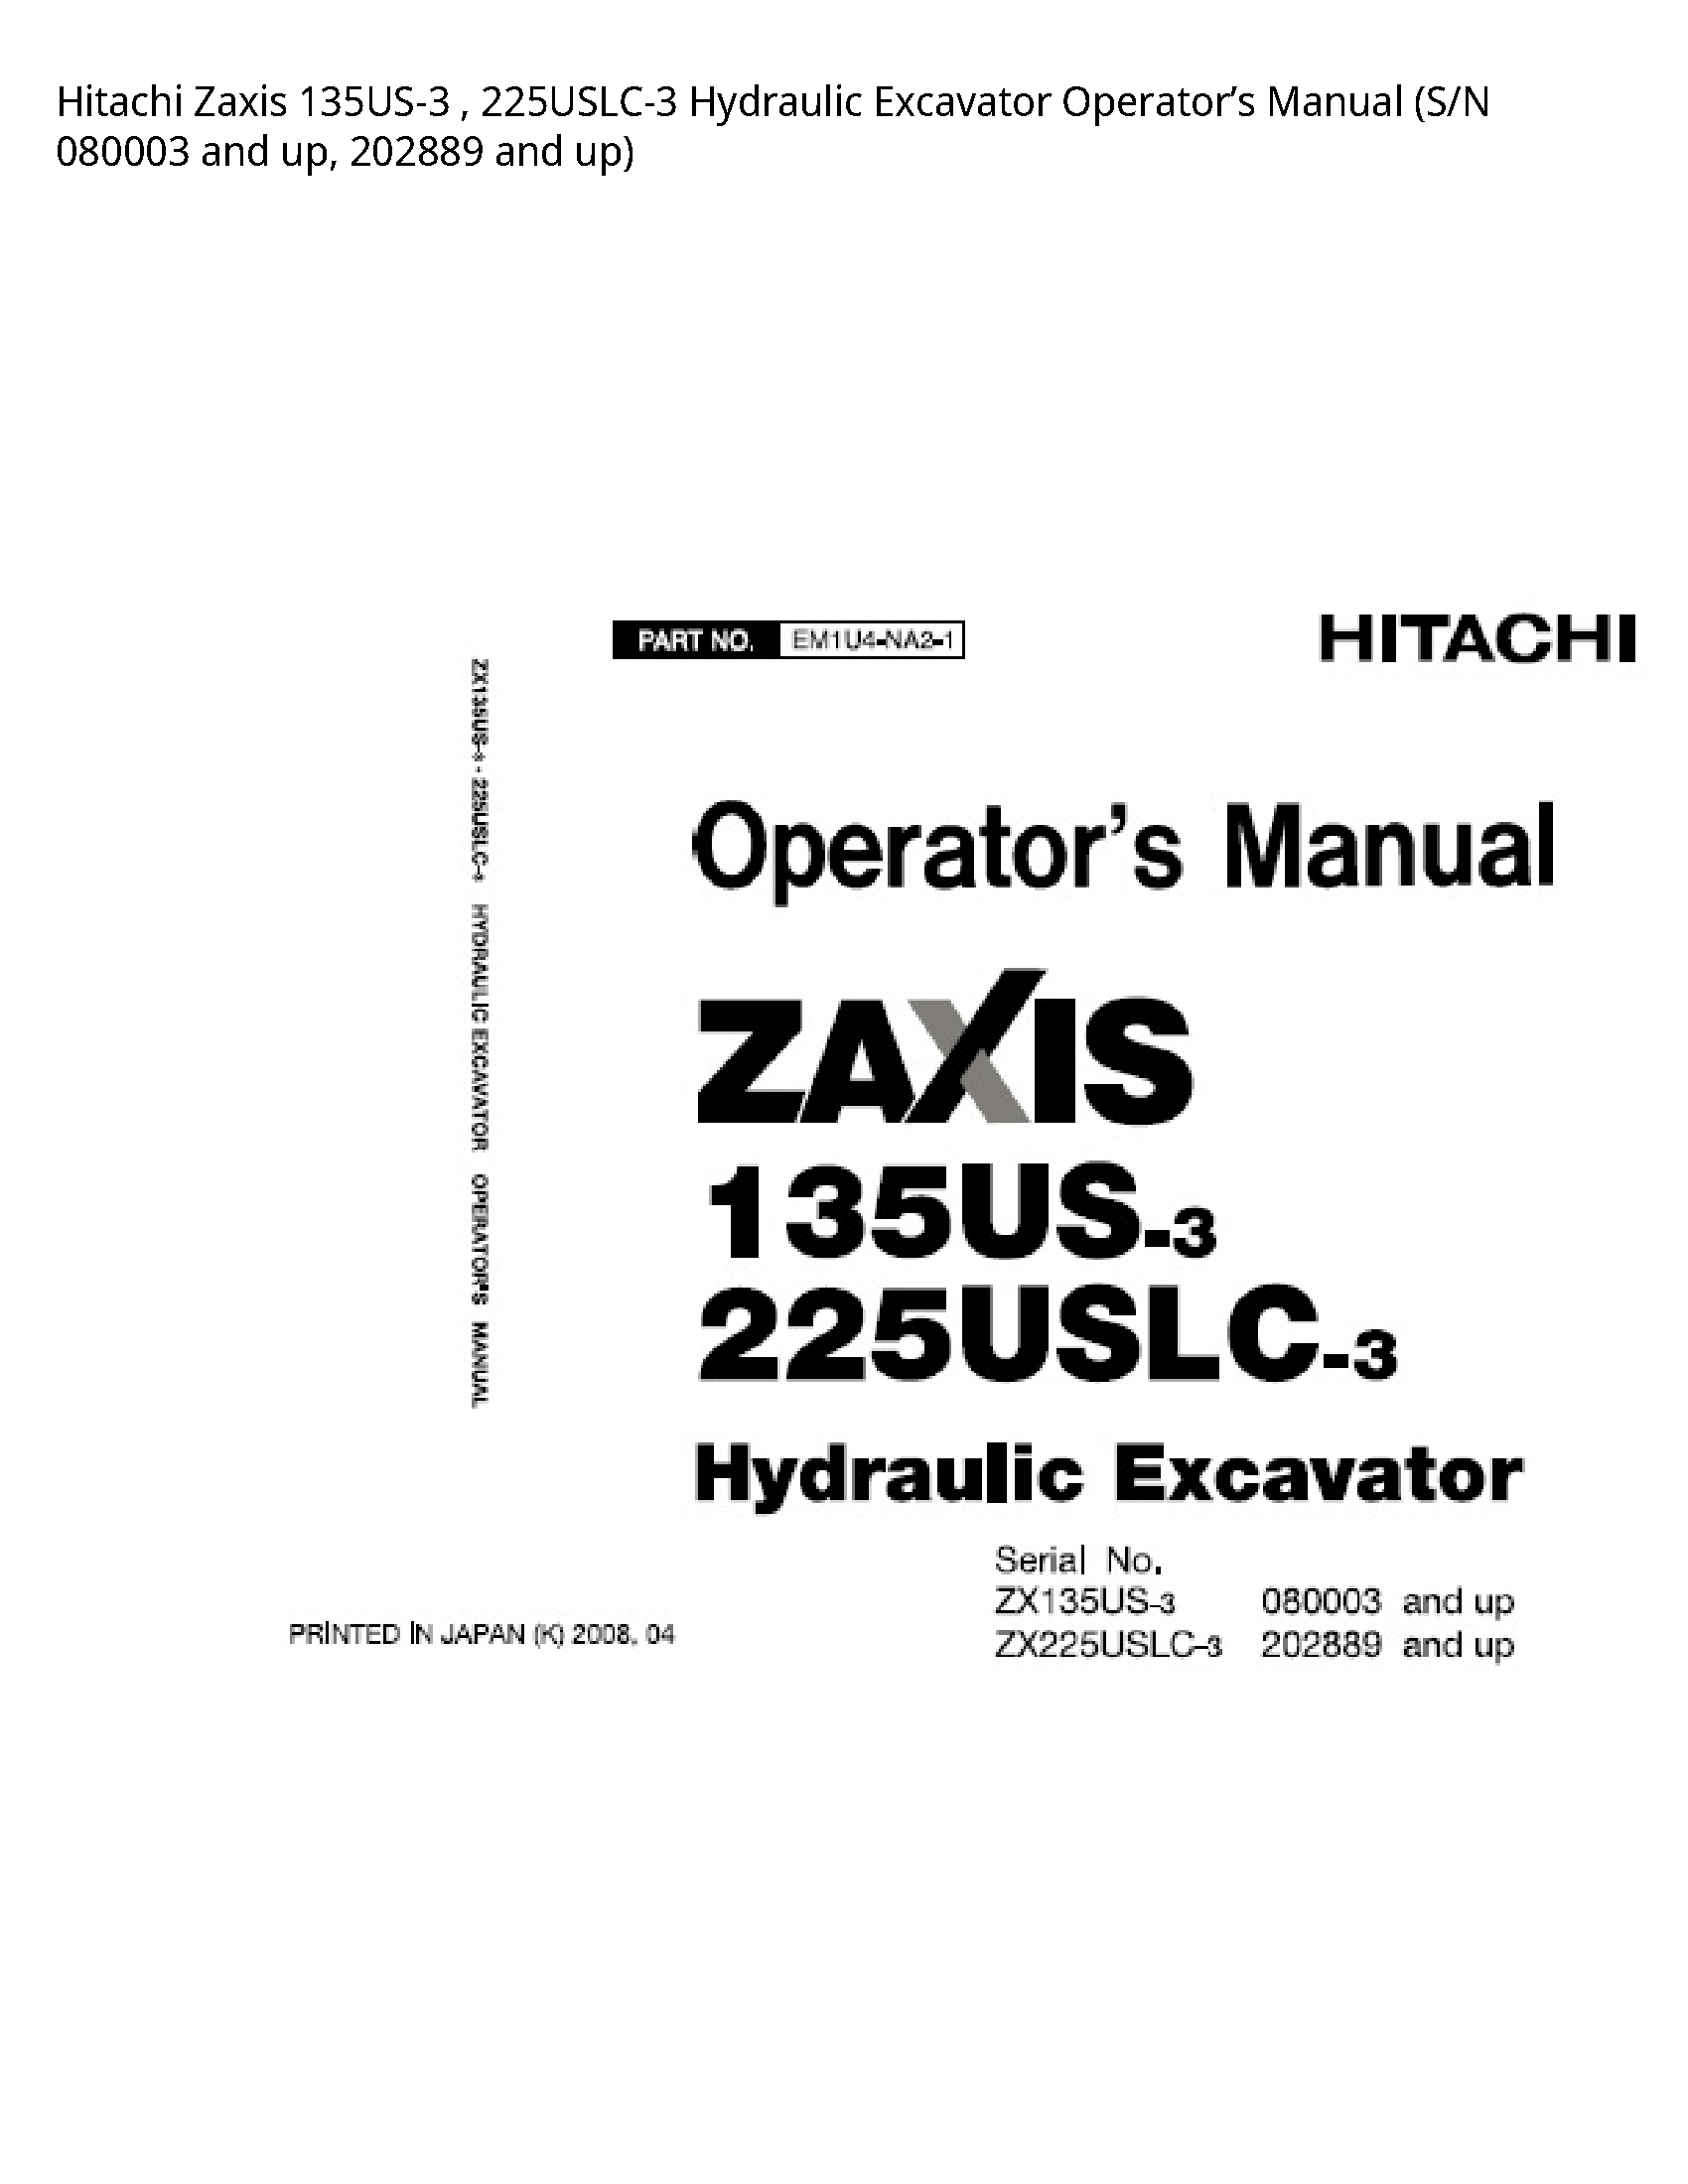 Hitachi 135US-3 Zaxis Hydraulic Excavator Operator’s manual